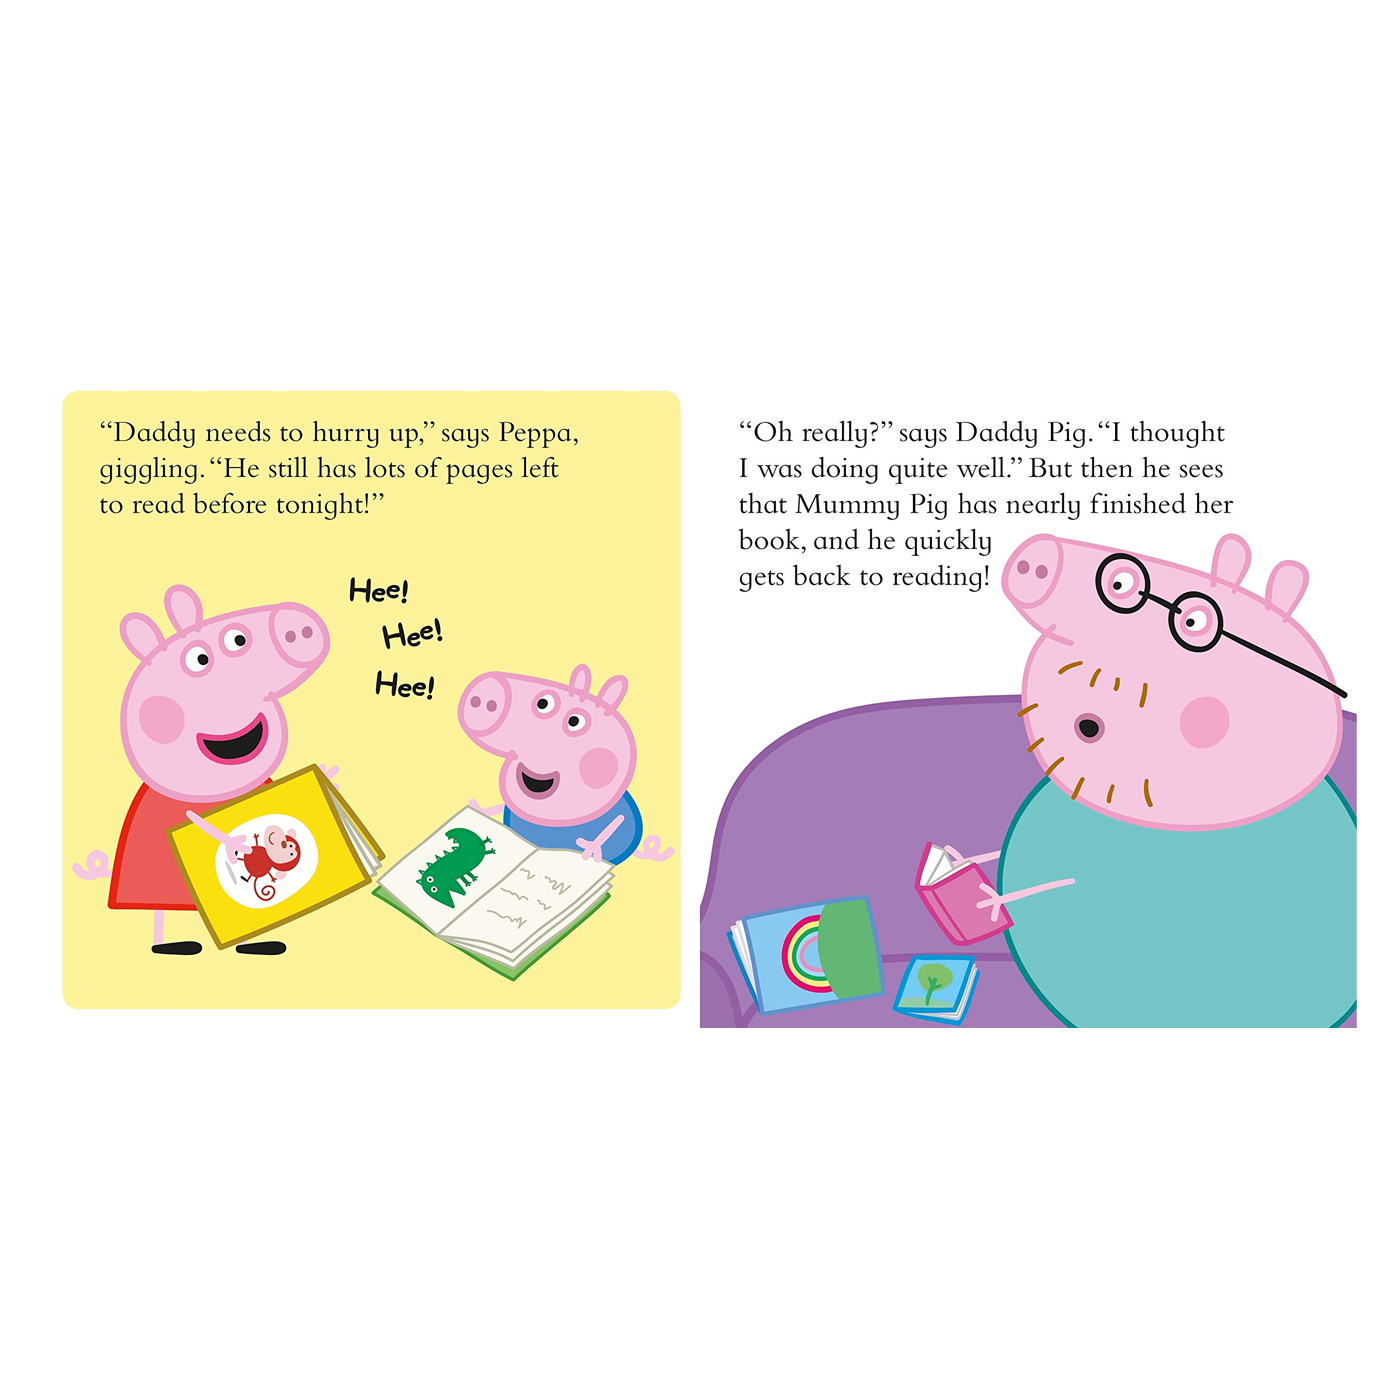 LADYBIRD Peppa Pig: Peppa Loves Reading